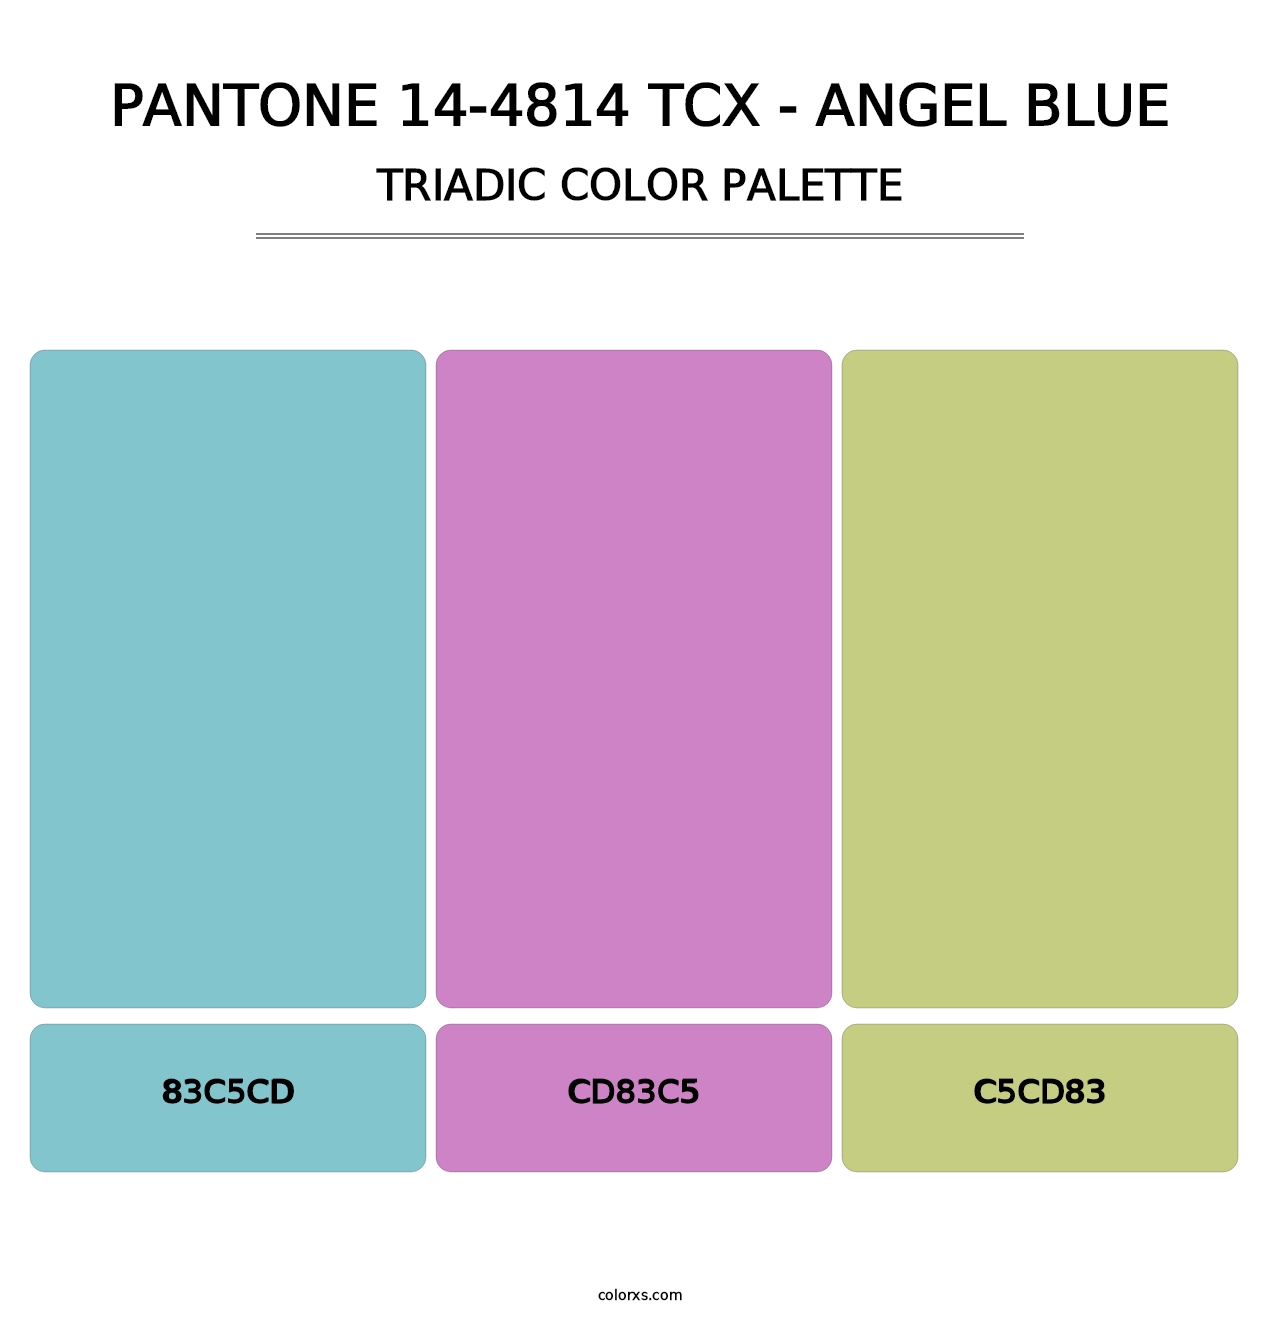 PANTONE 14-4814 TCX - Angel Blue - Triadic Color Palette